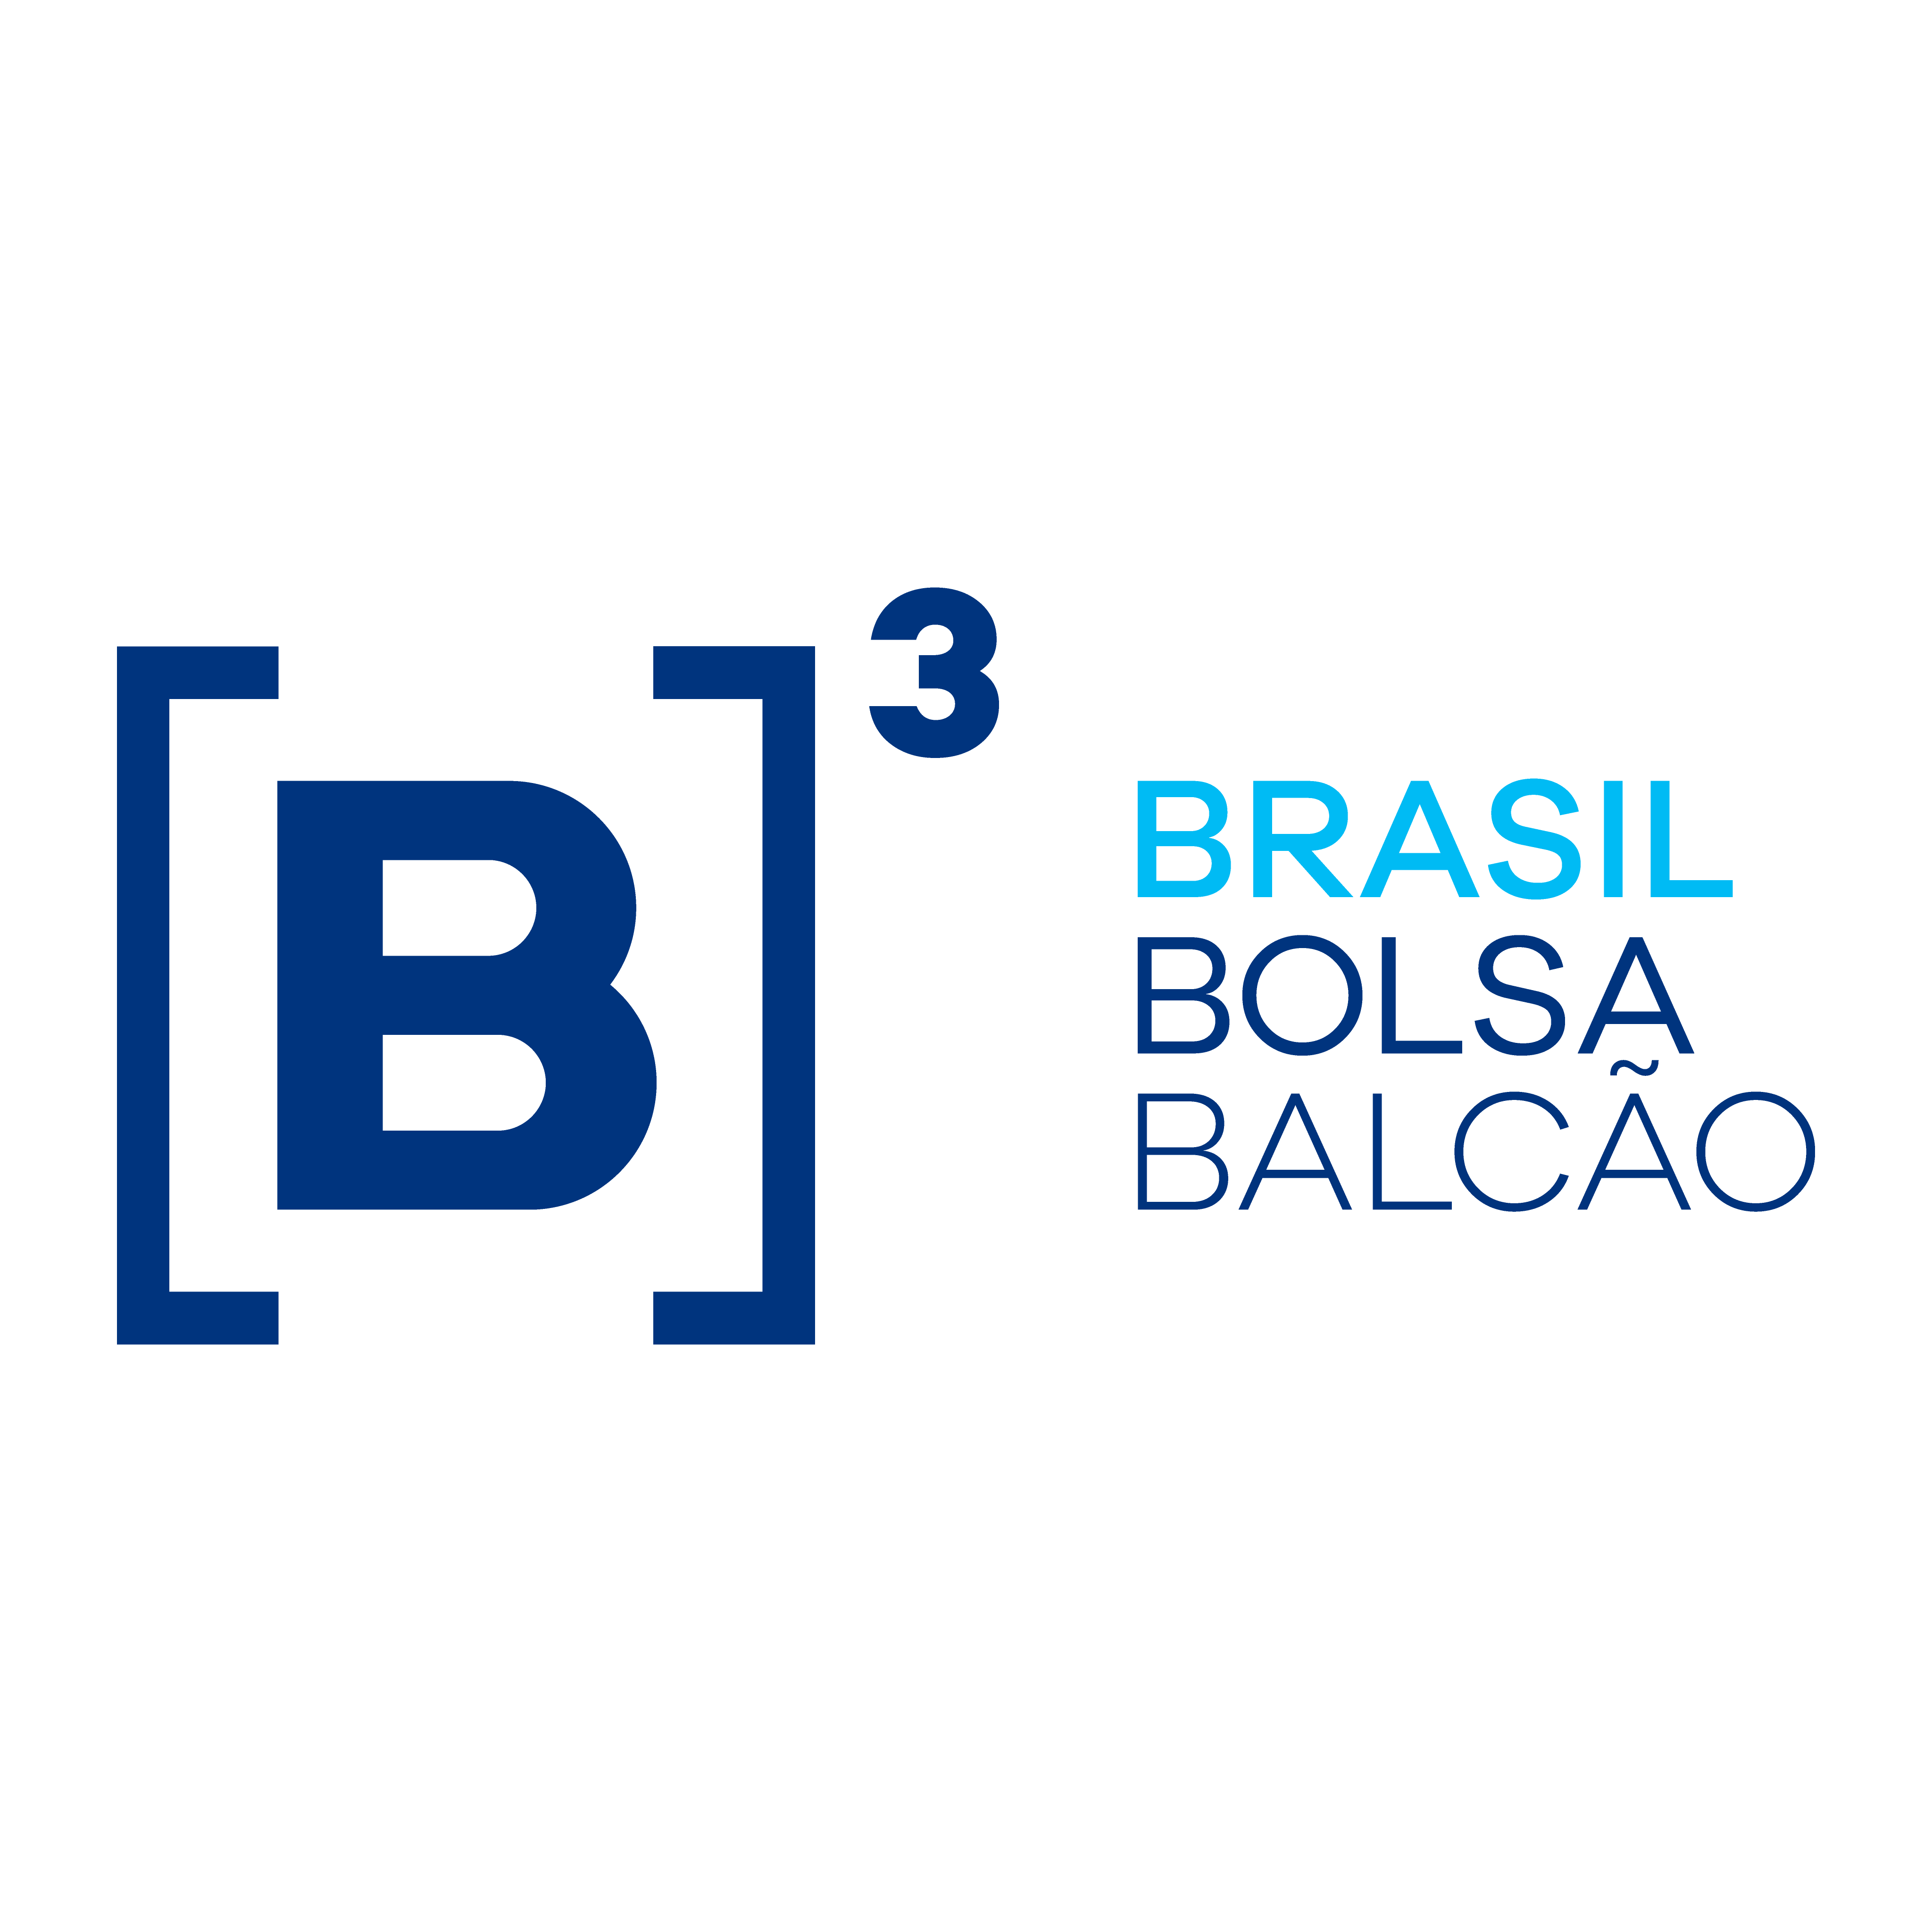 logo b3 brasil bolsa balcao